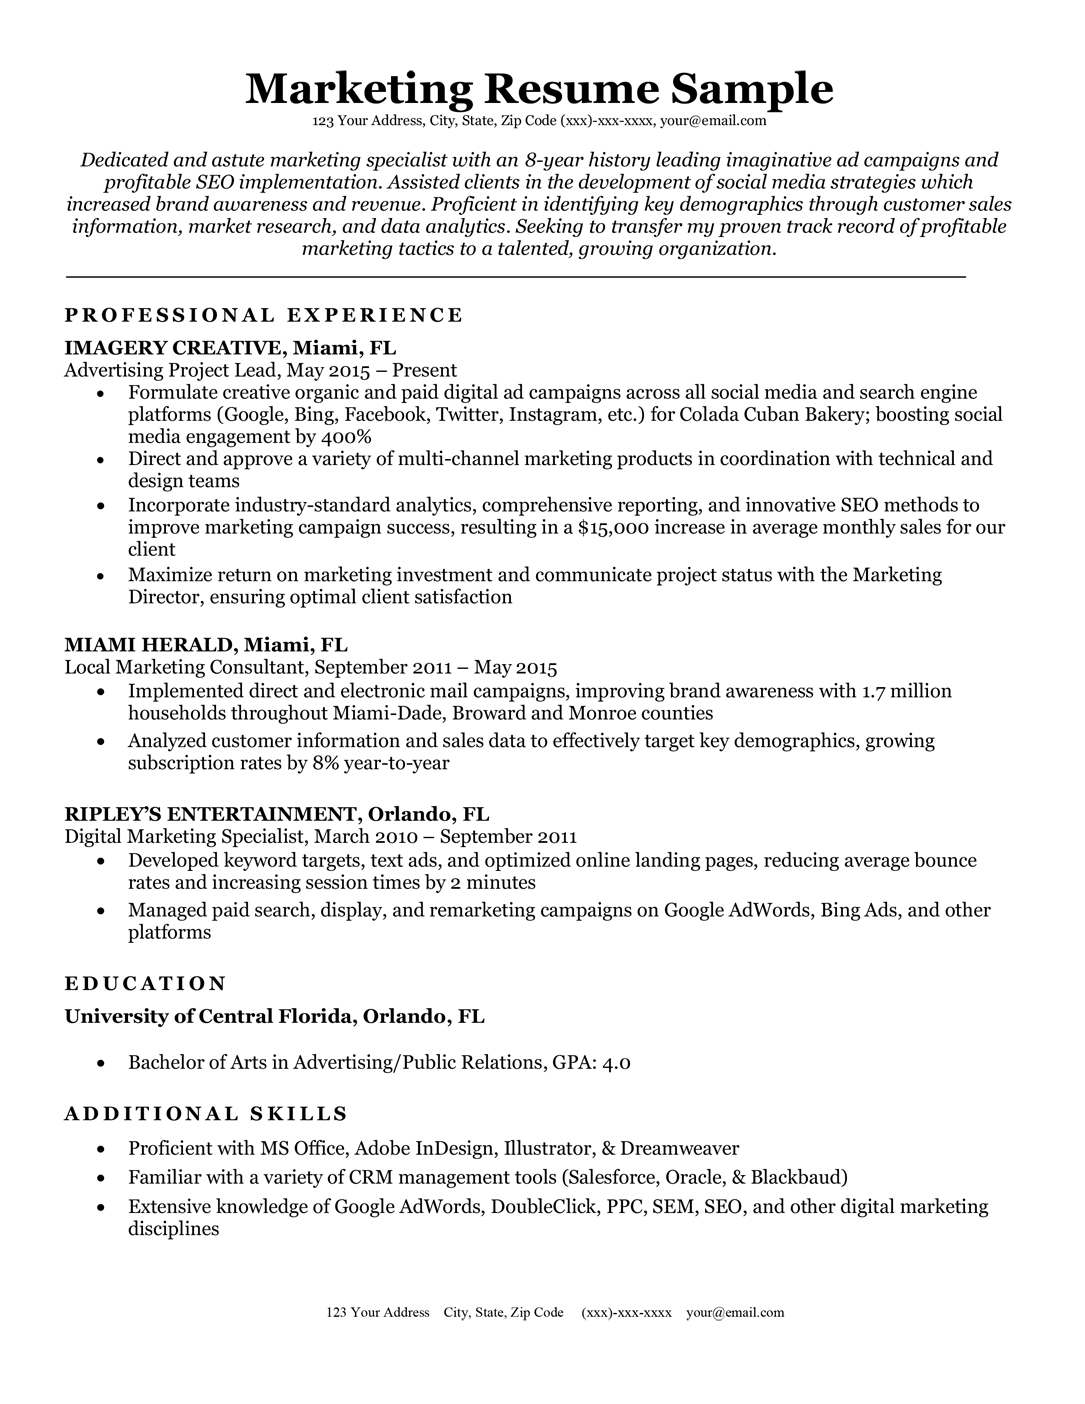 Marketing resume sample